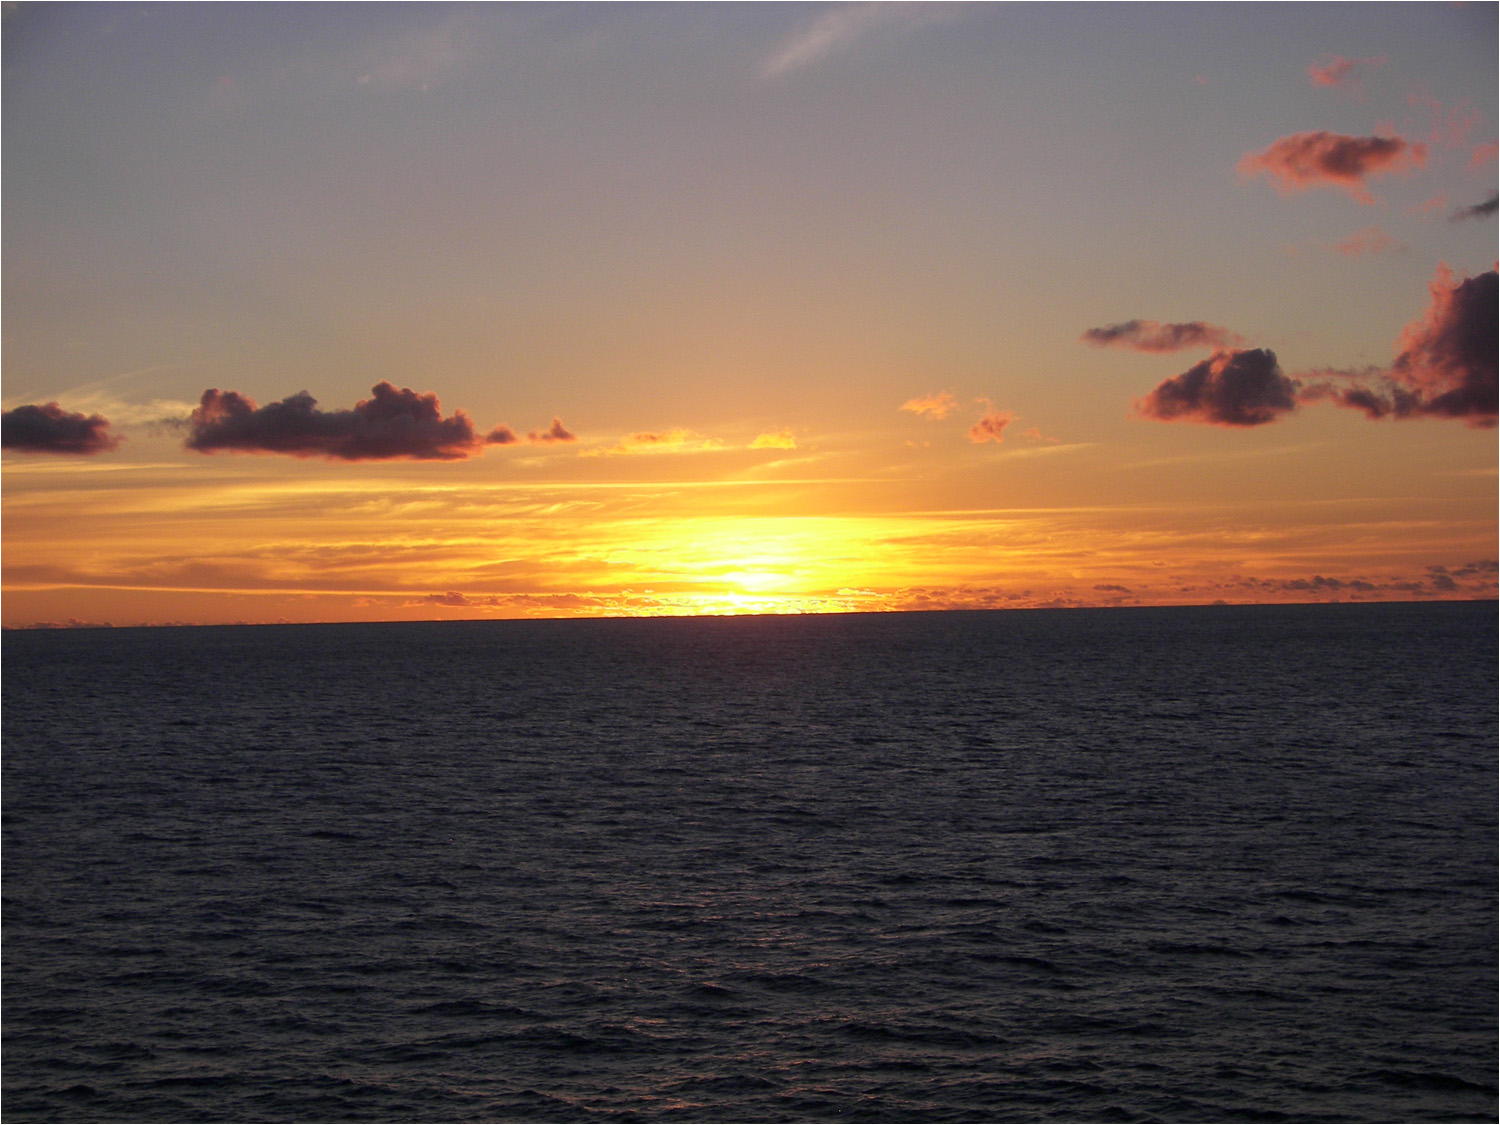 Sunset Sunday evening between Moorea and Tahiti